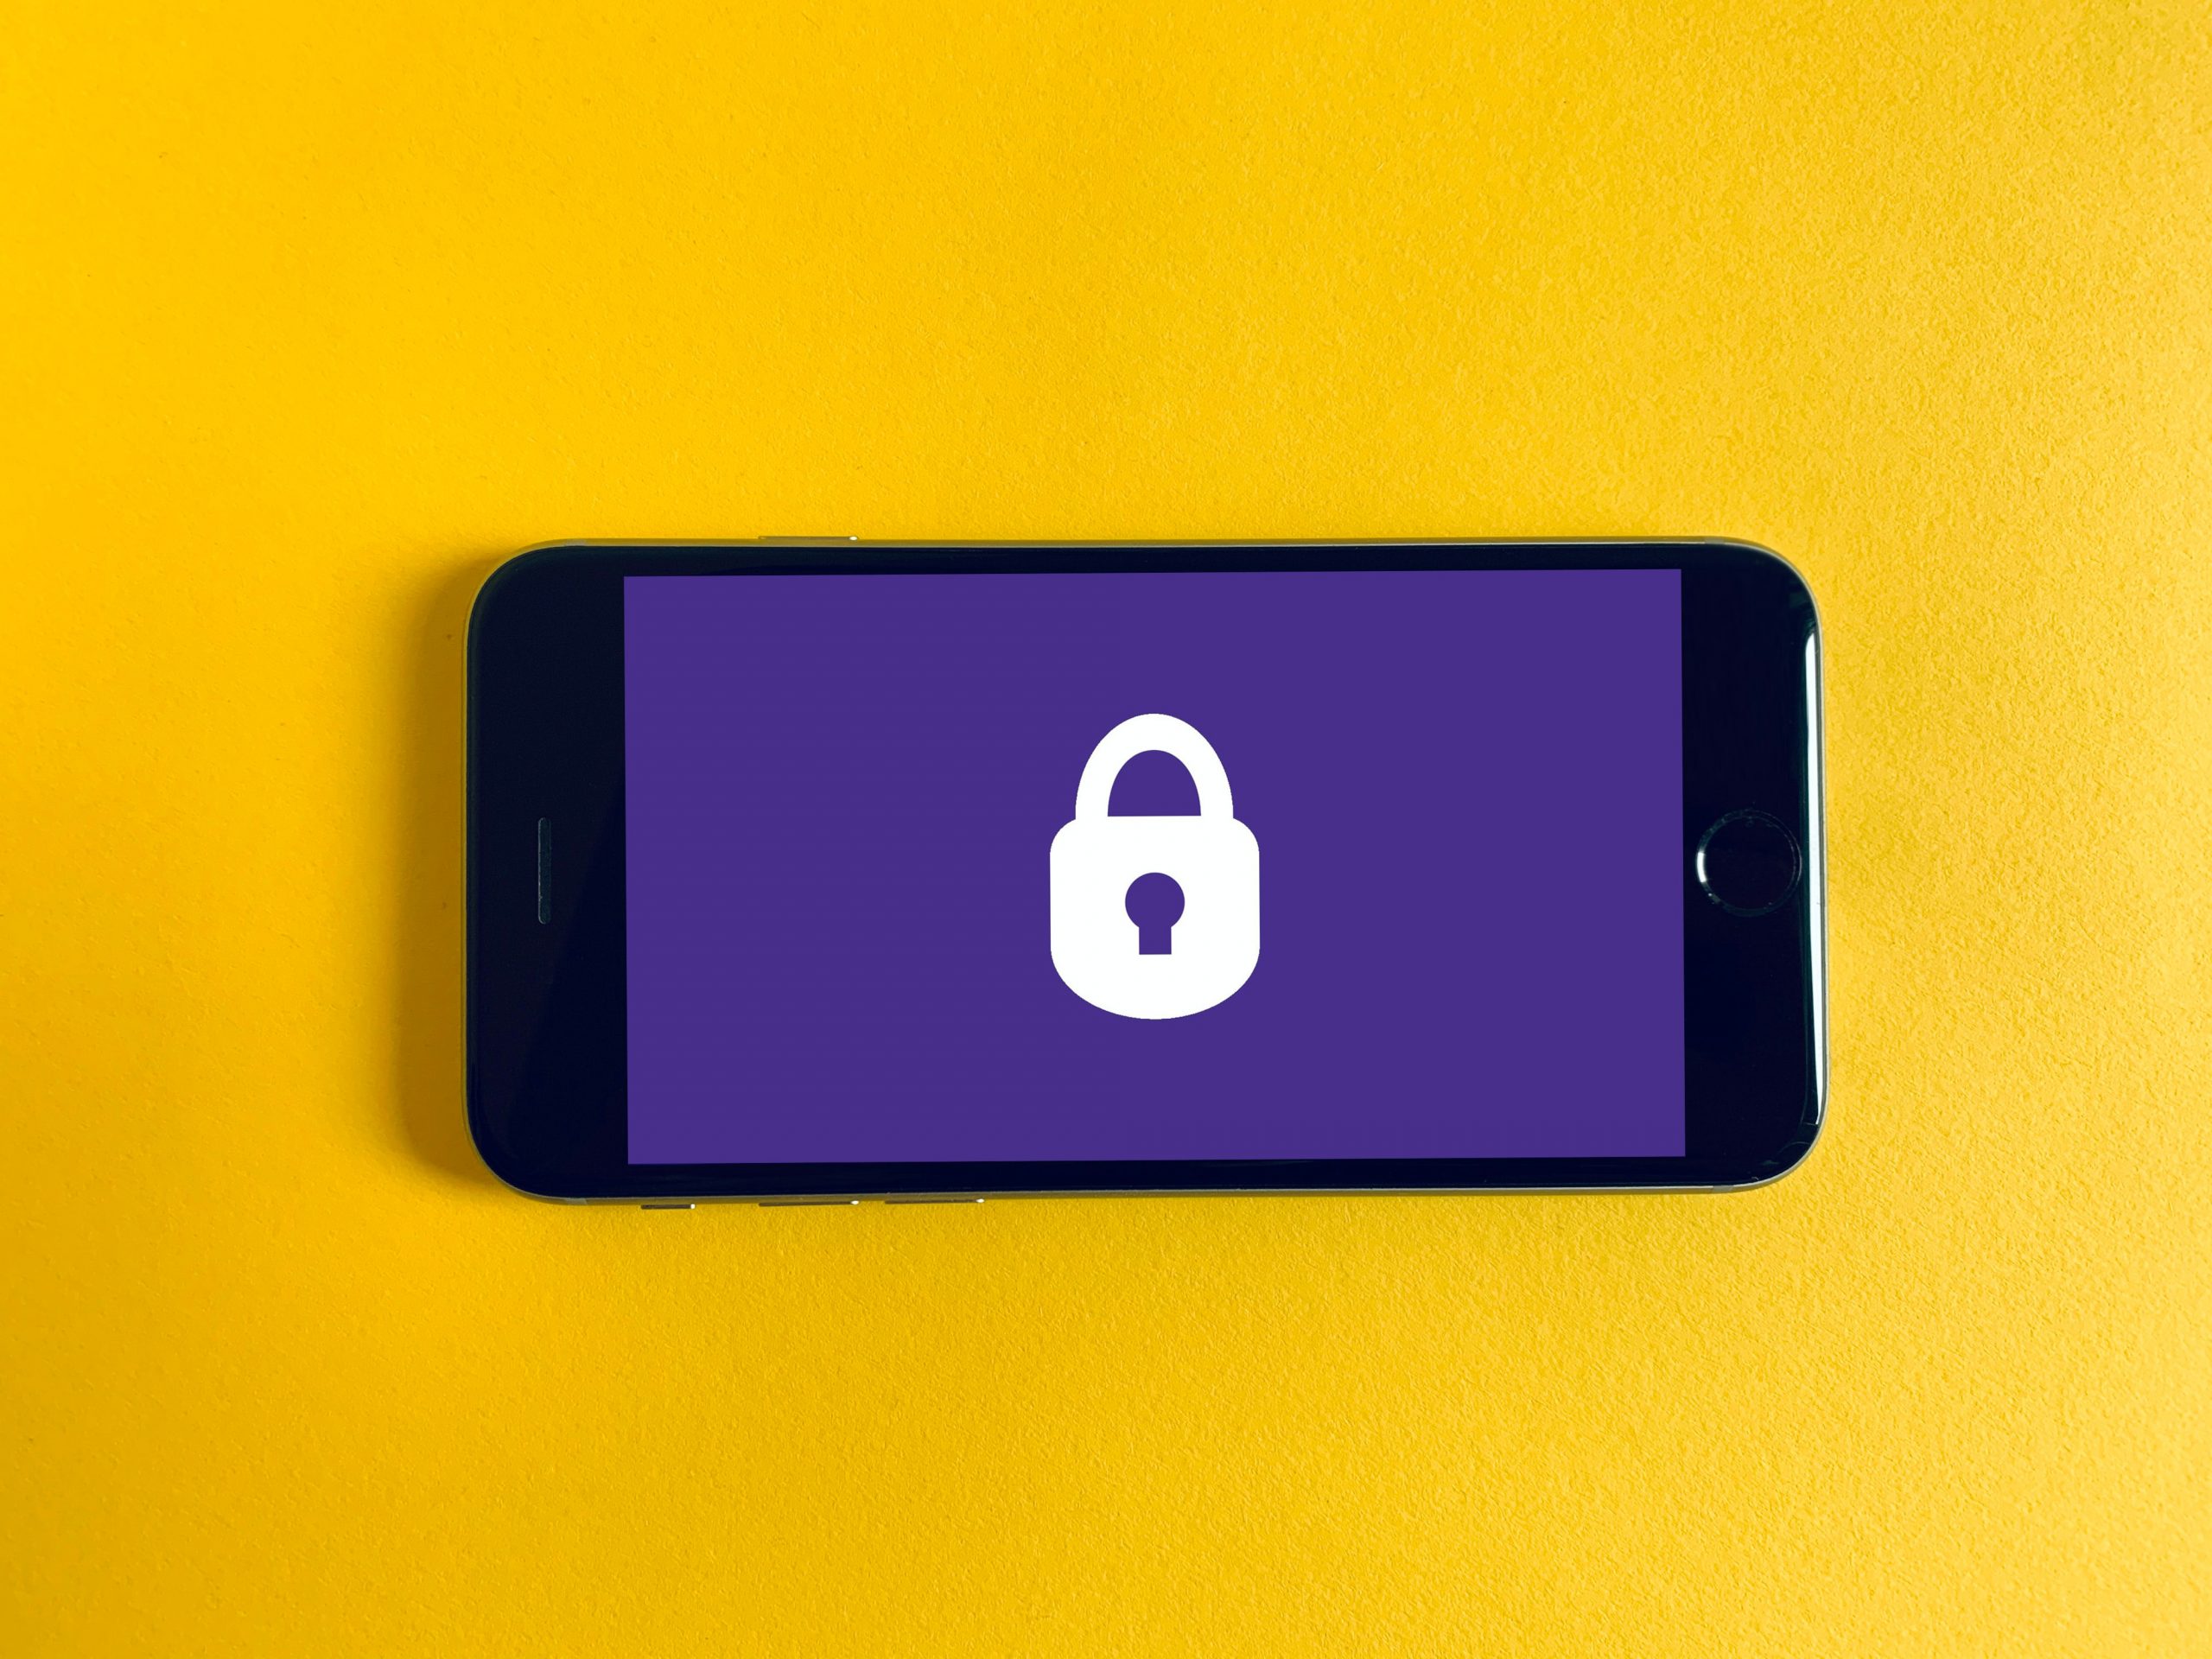 Mobile phone with padlock illustration on yellow background. Symbolizes data security.